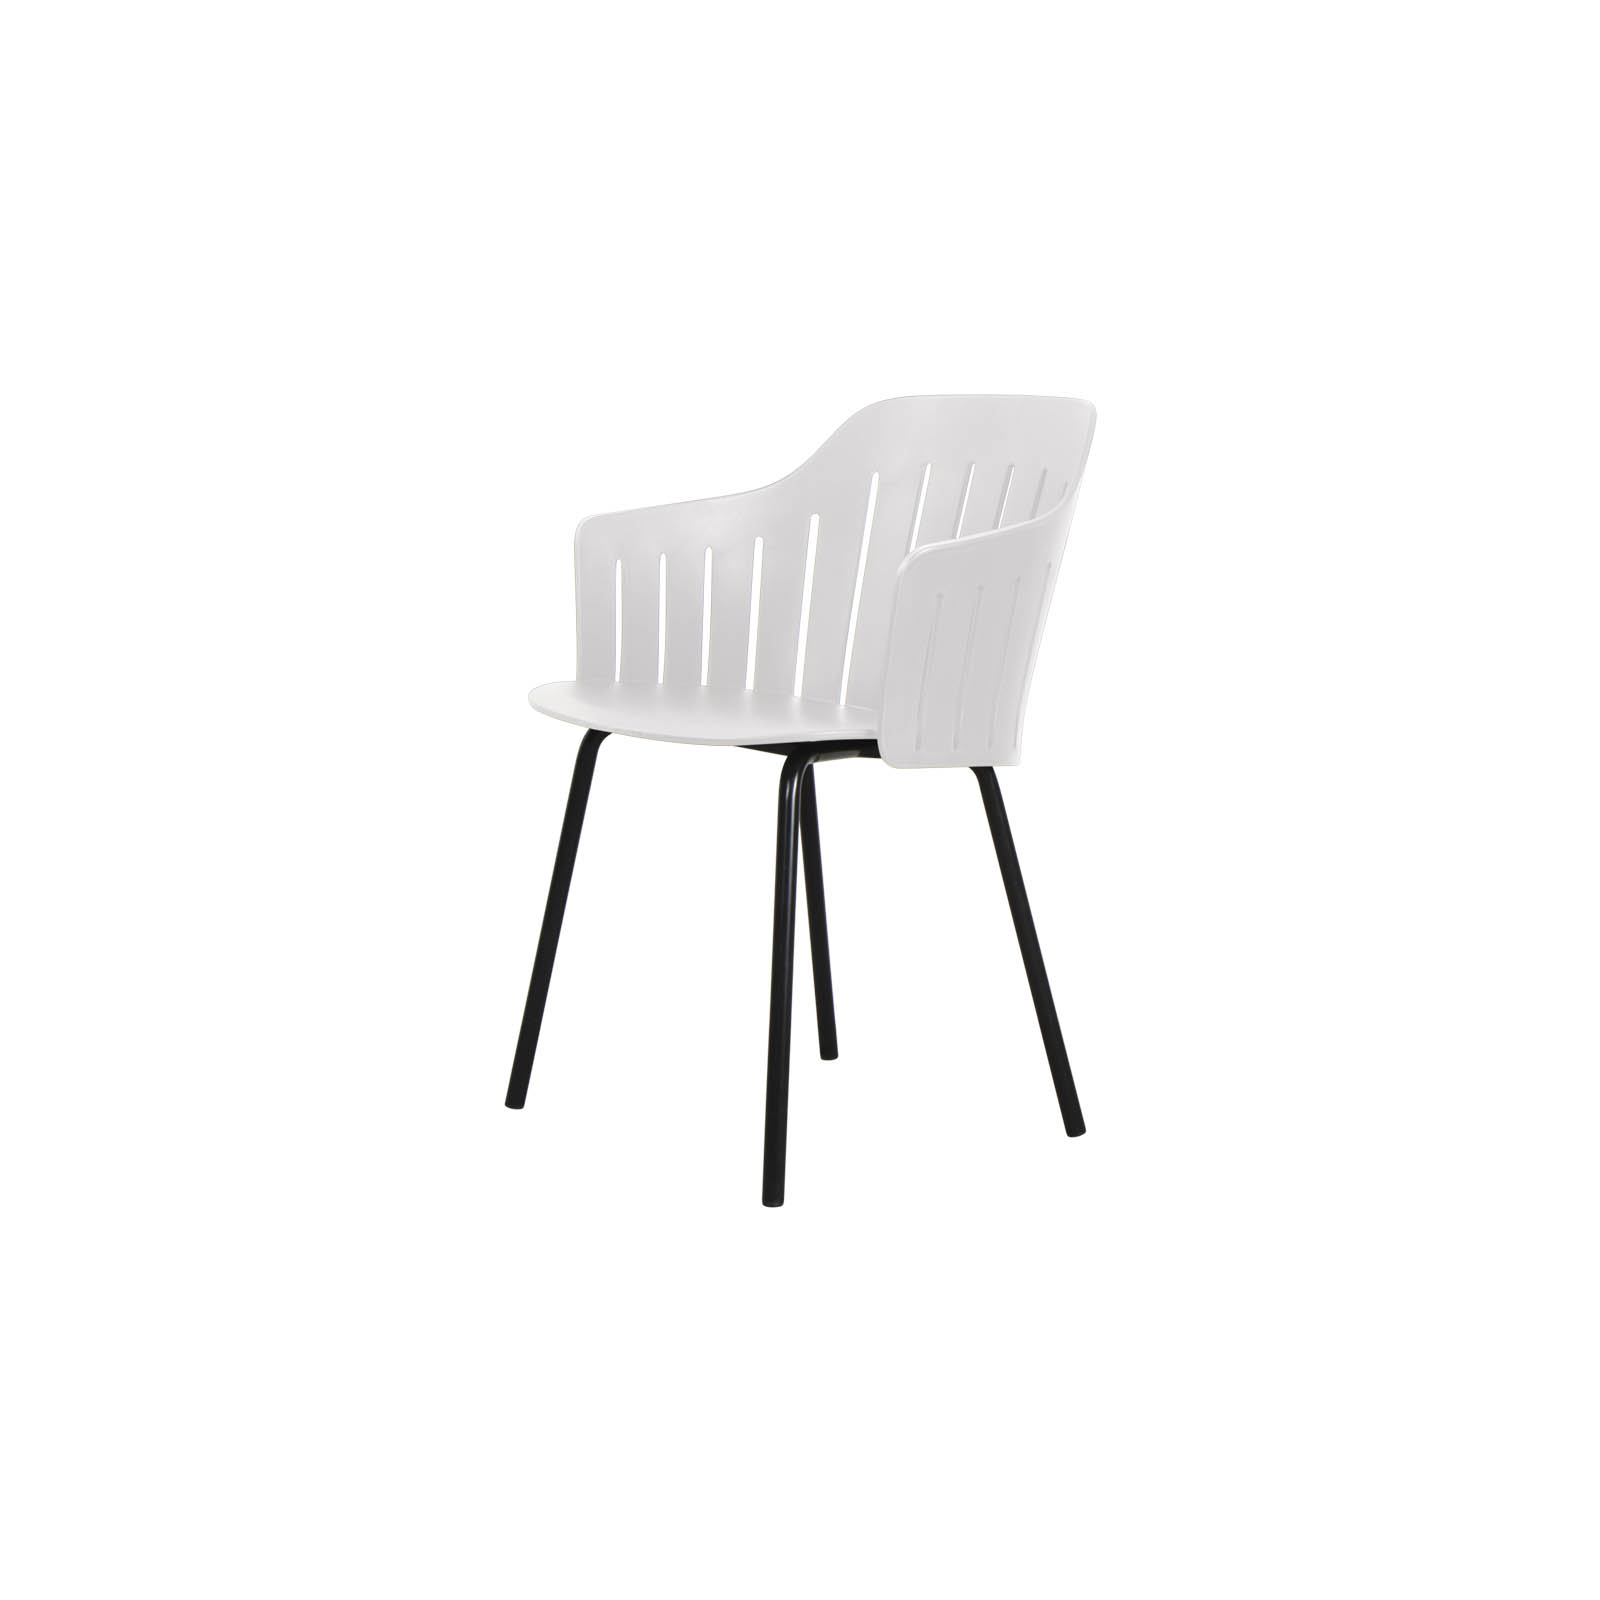 Choice chair aus recyceltes Polypropylene in White mit Basis aus Steel in Black